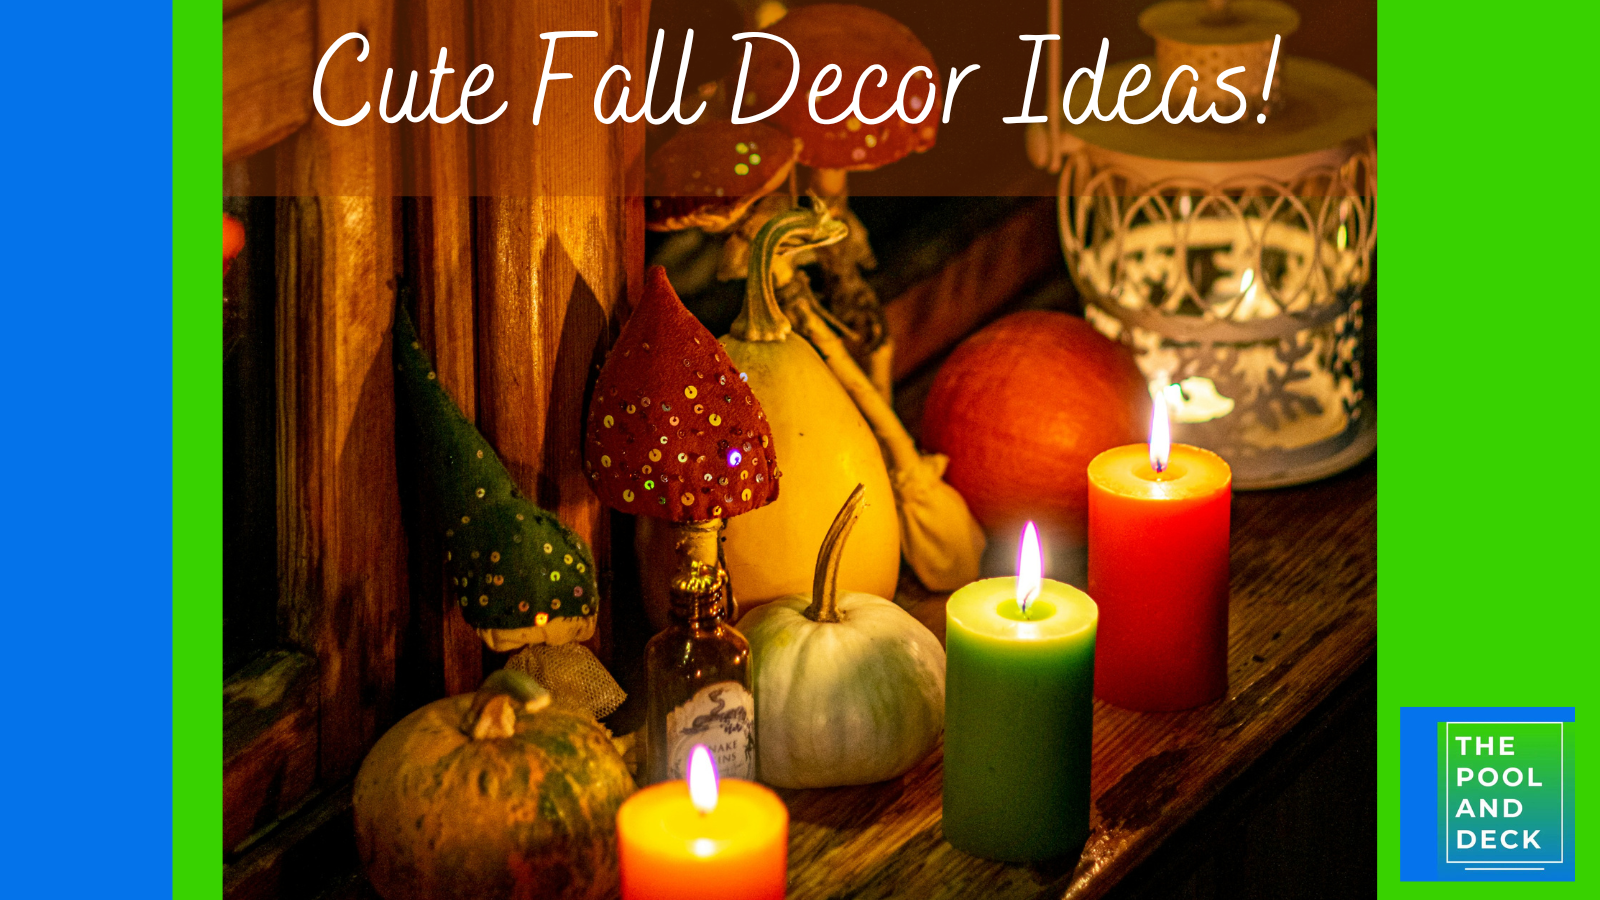 15 Cute Fall Decor Ideas to Spread Holiday Cheer